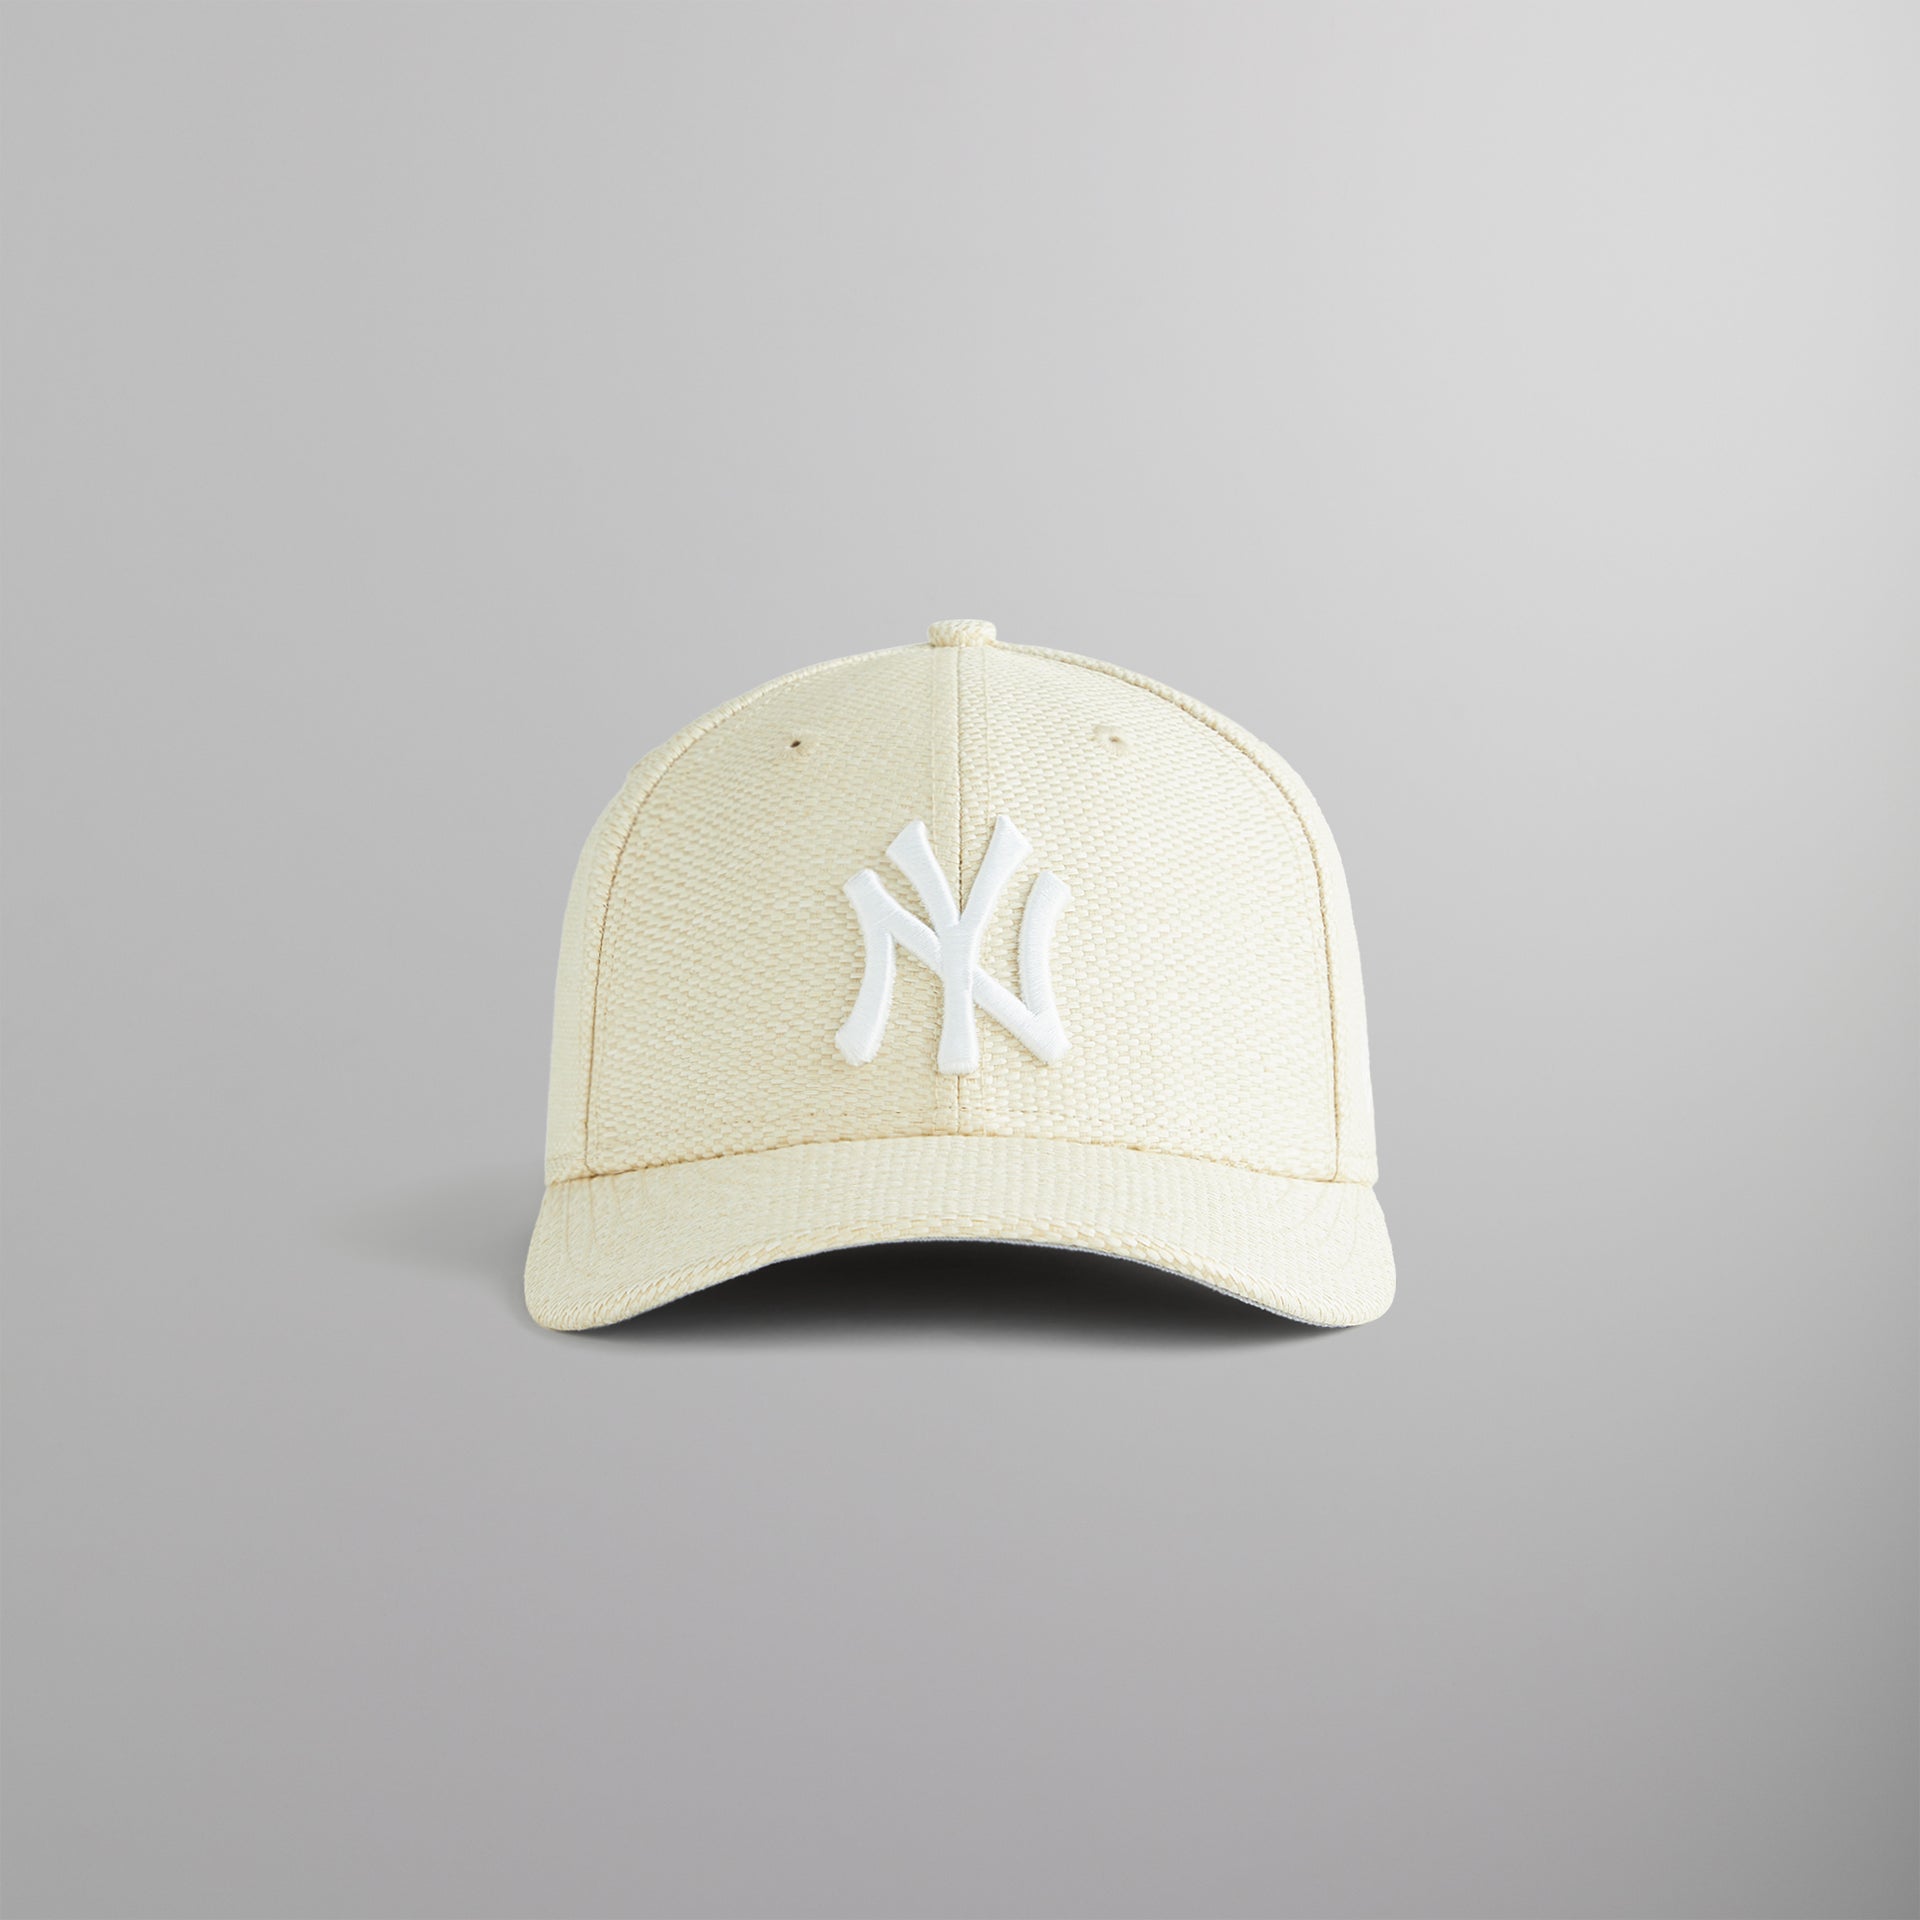 UrlfreezeShops & New Era for the New York Yankees Raffia Fitted Cap - Sandrift